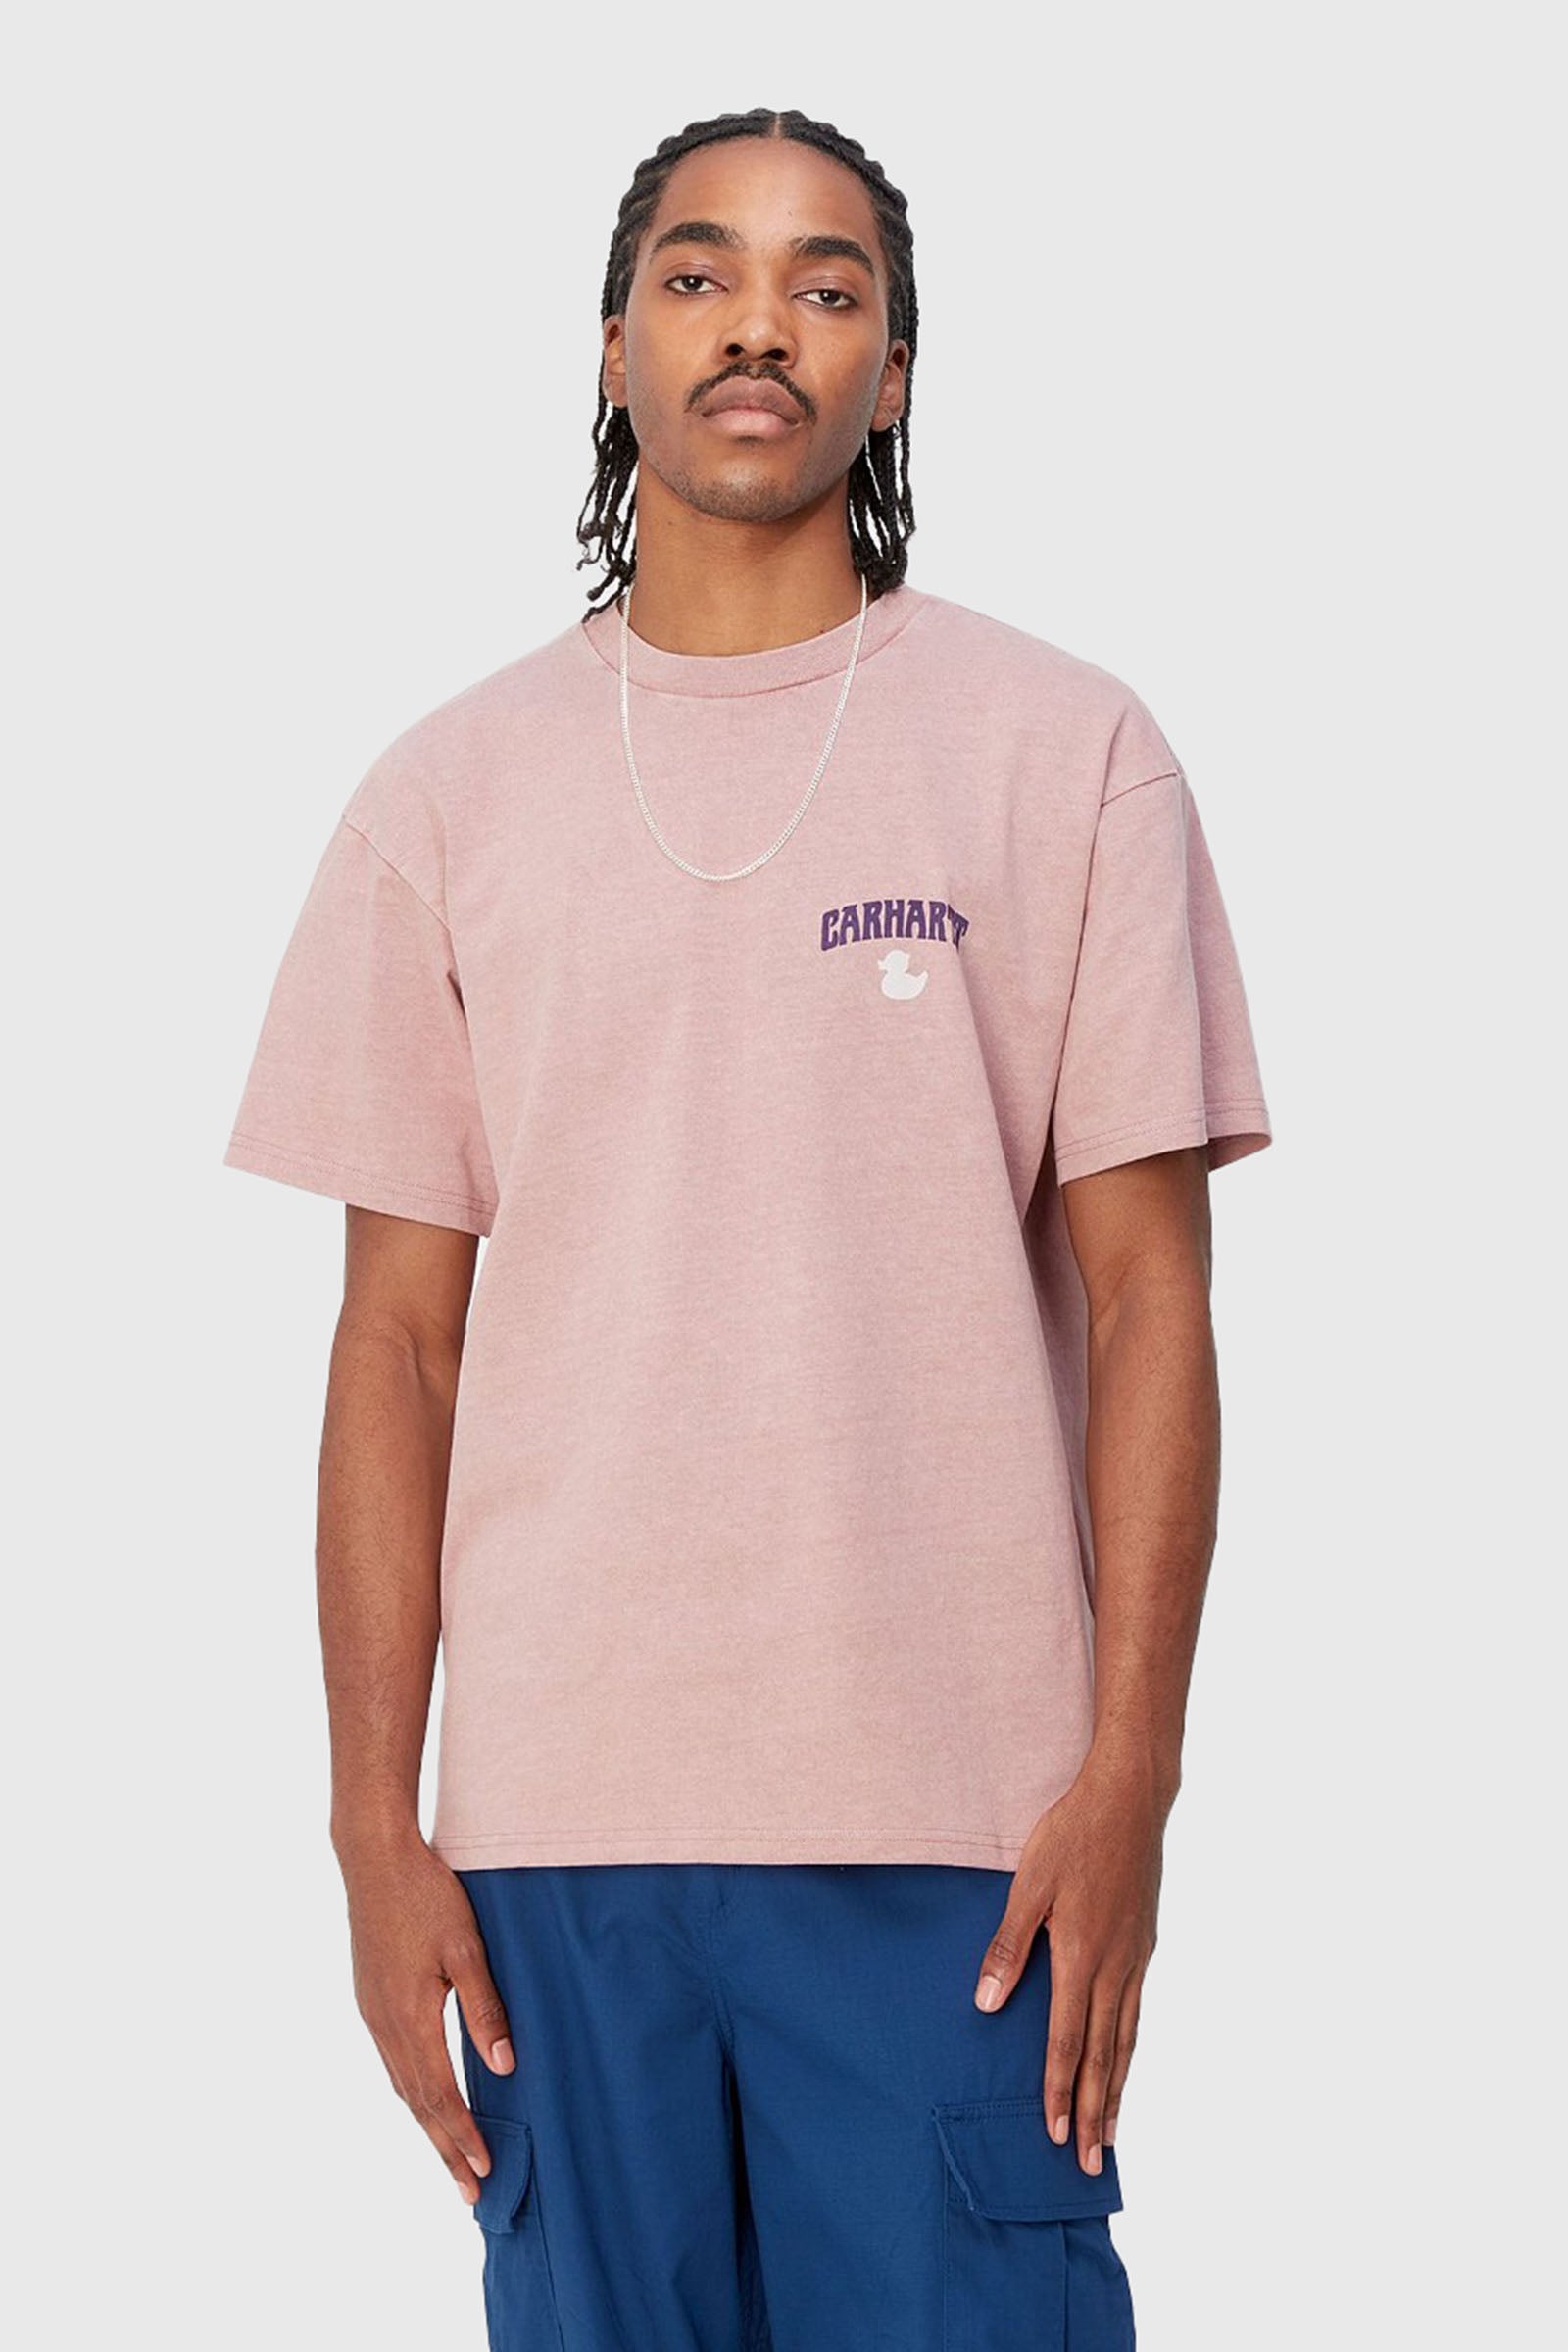 Carhartt Wip T-shirt Short Sleeve Duckin' Rosa Antico Uomo - 1